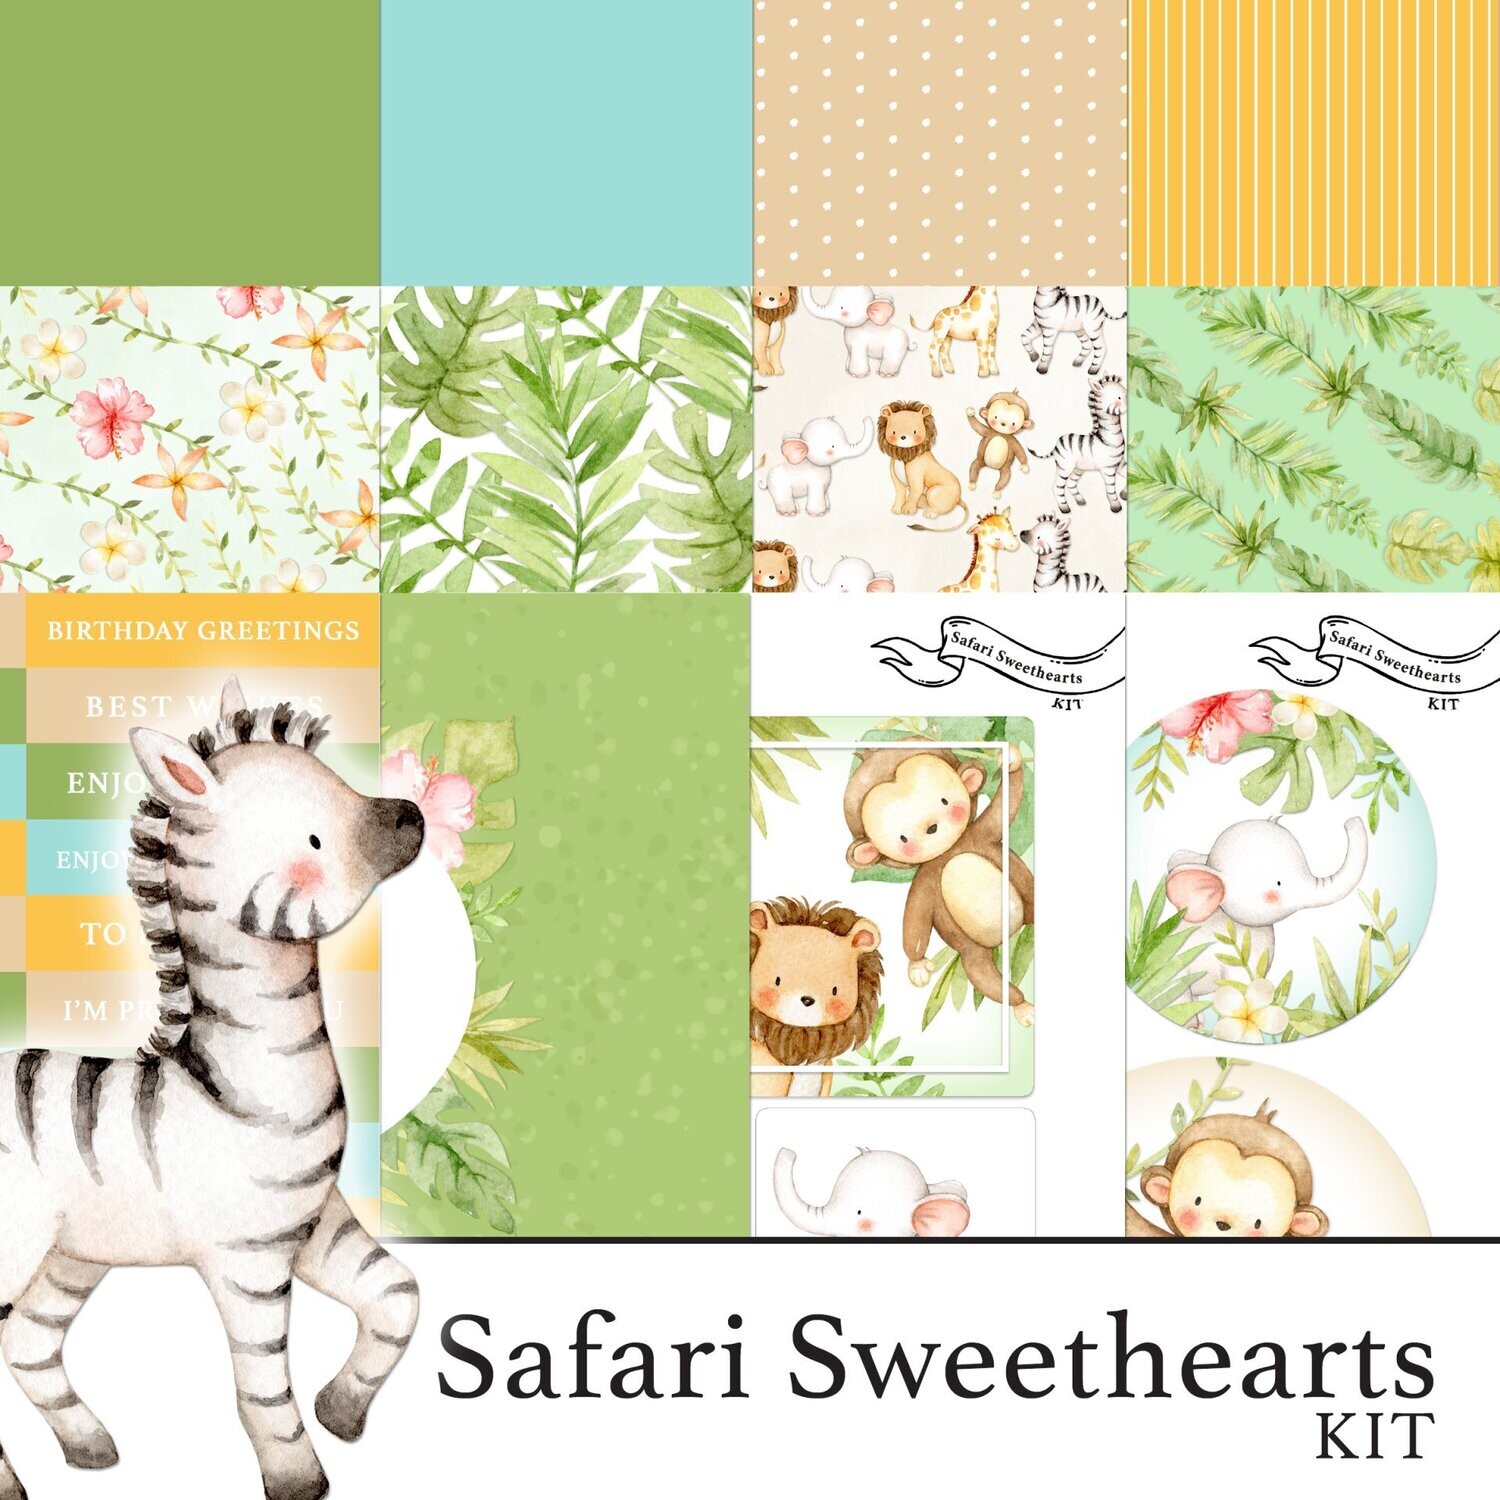 Safari Sweethearts Kit